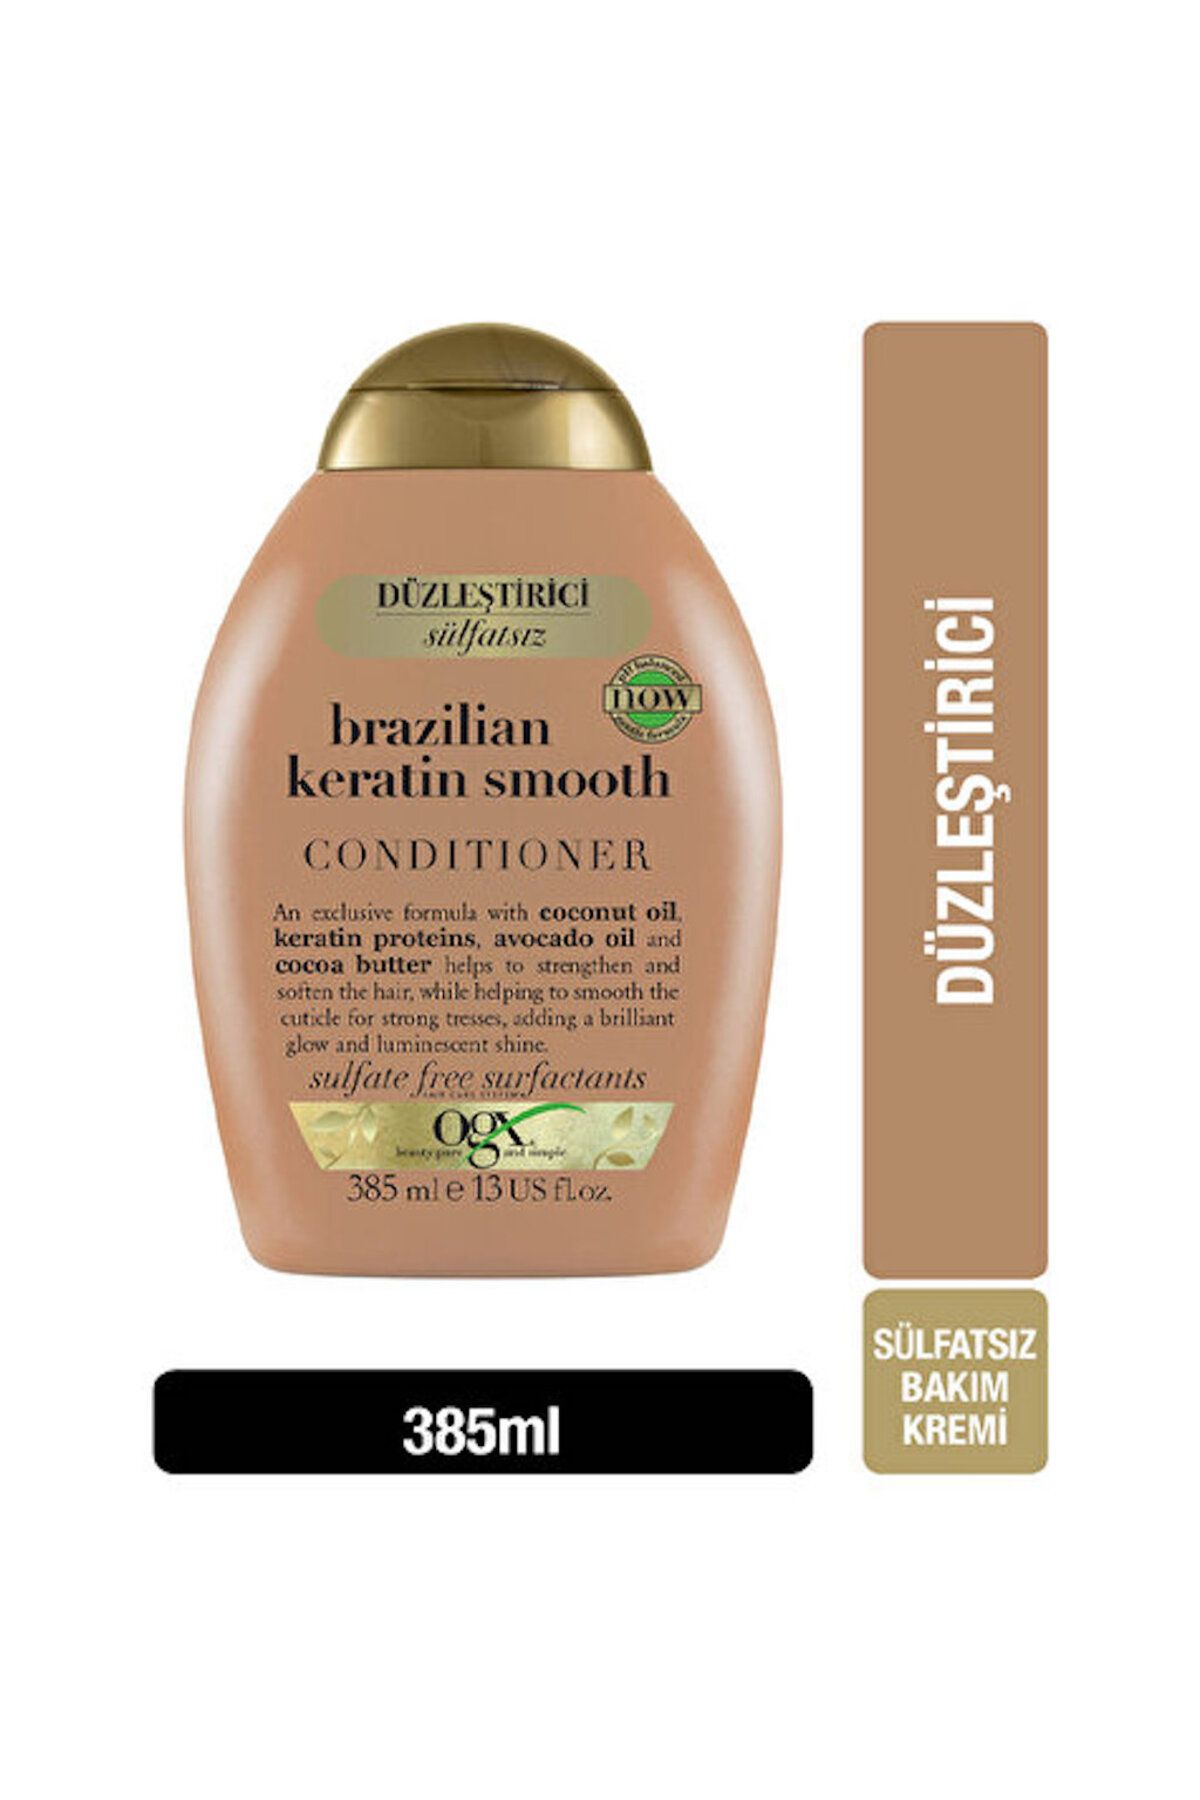 OGX Keratin Saç Bakım Kremi - Ogx Düzleştirici Brezilya Keratin Saç Bakım Kremi 385 ml